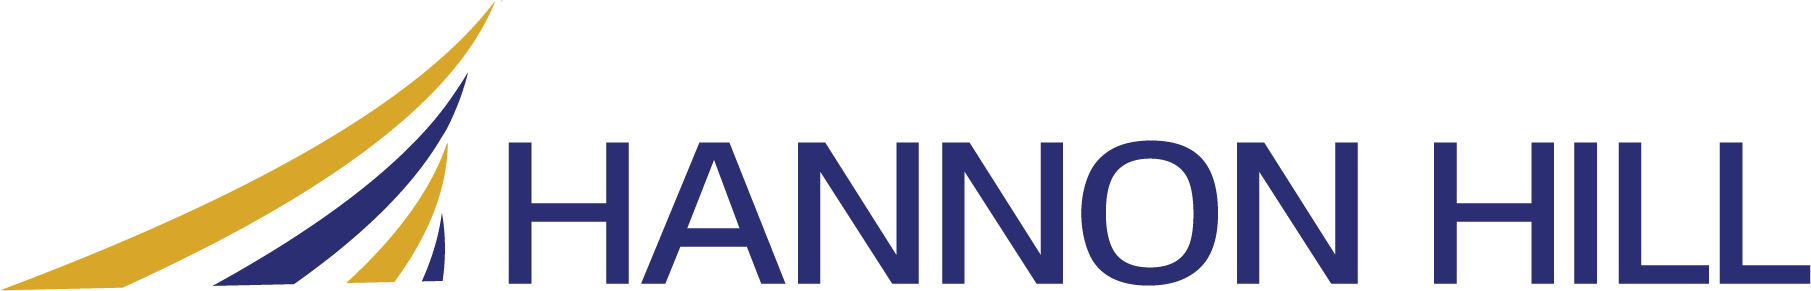 hannon-hill-logo